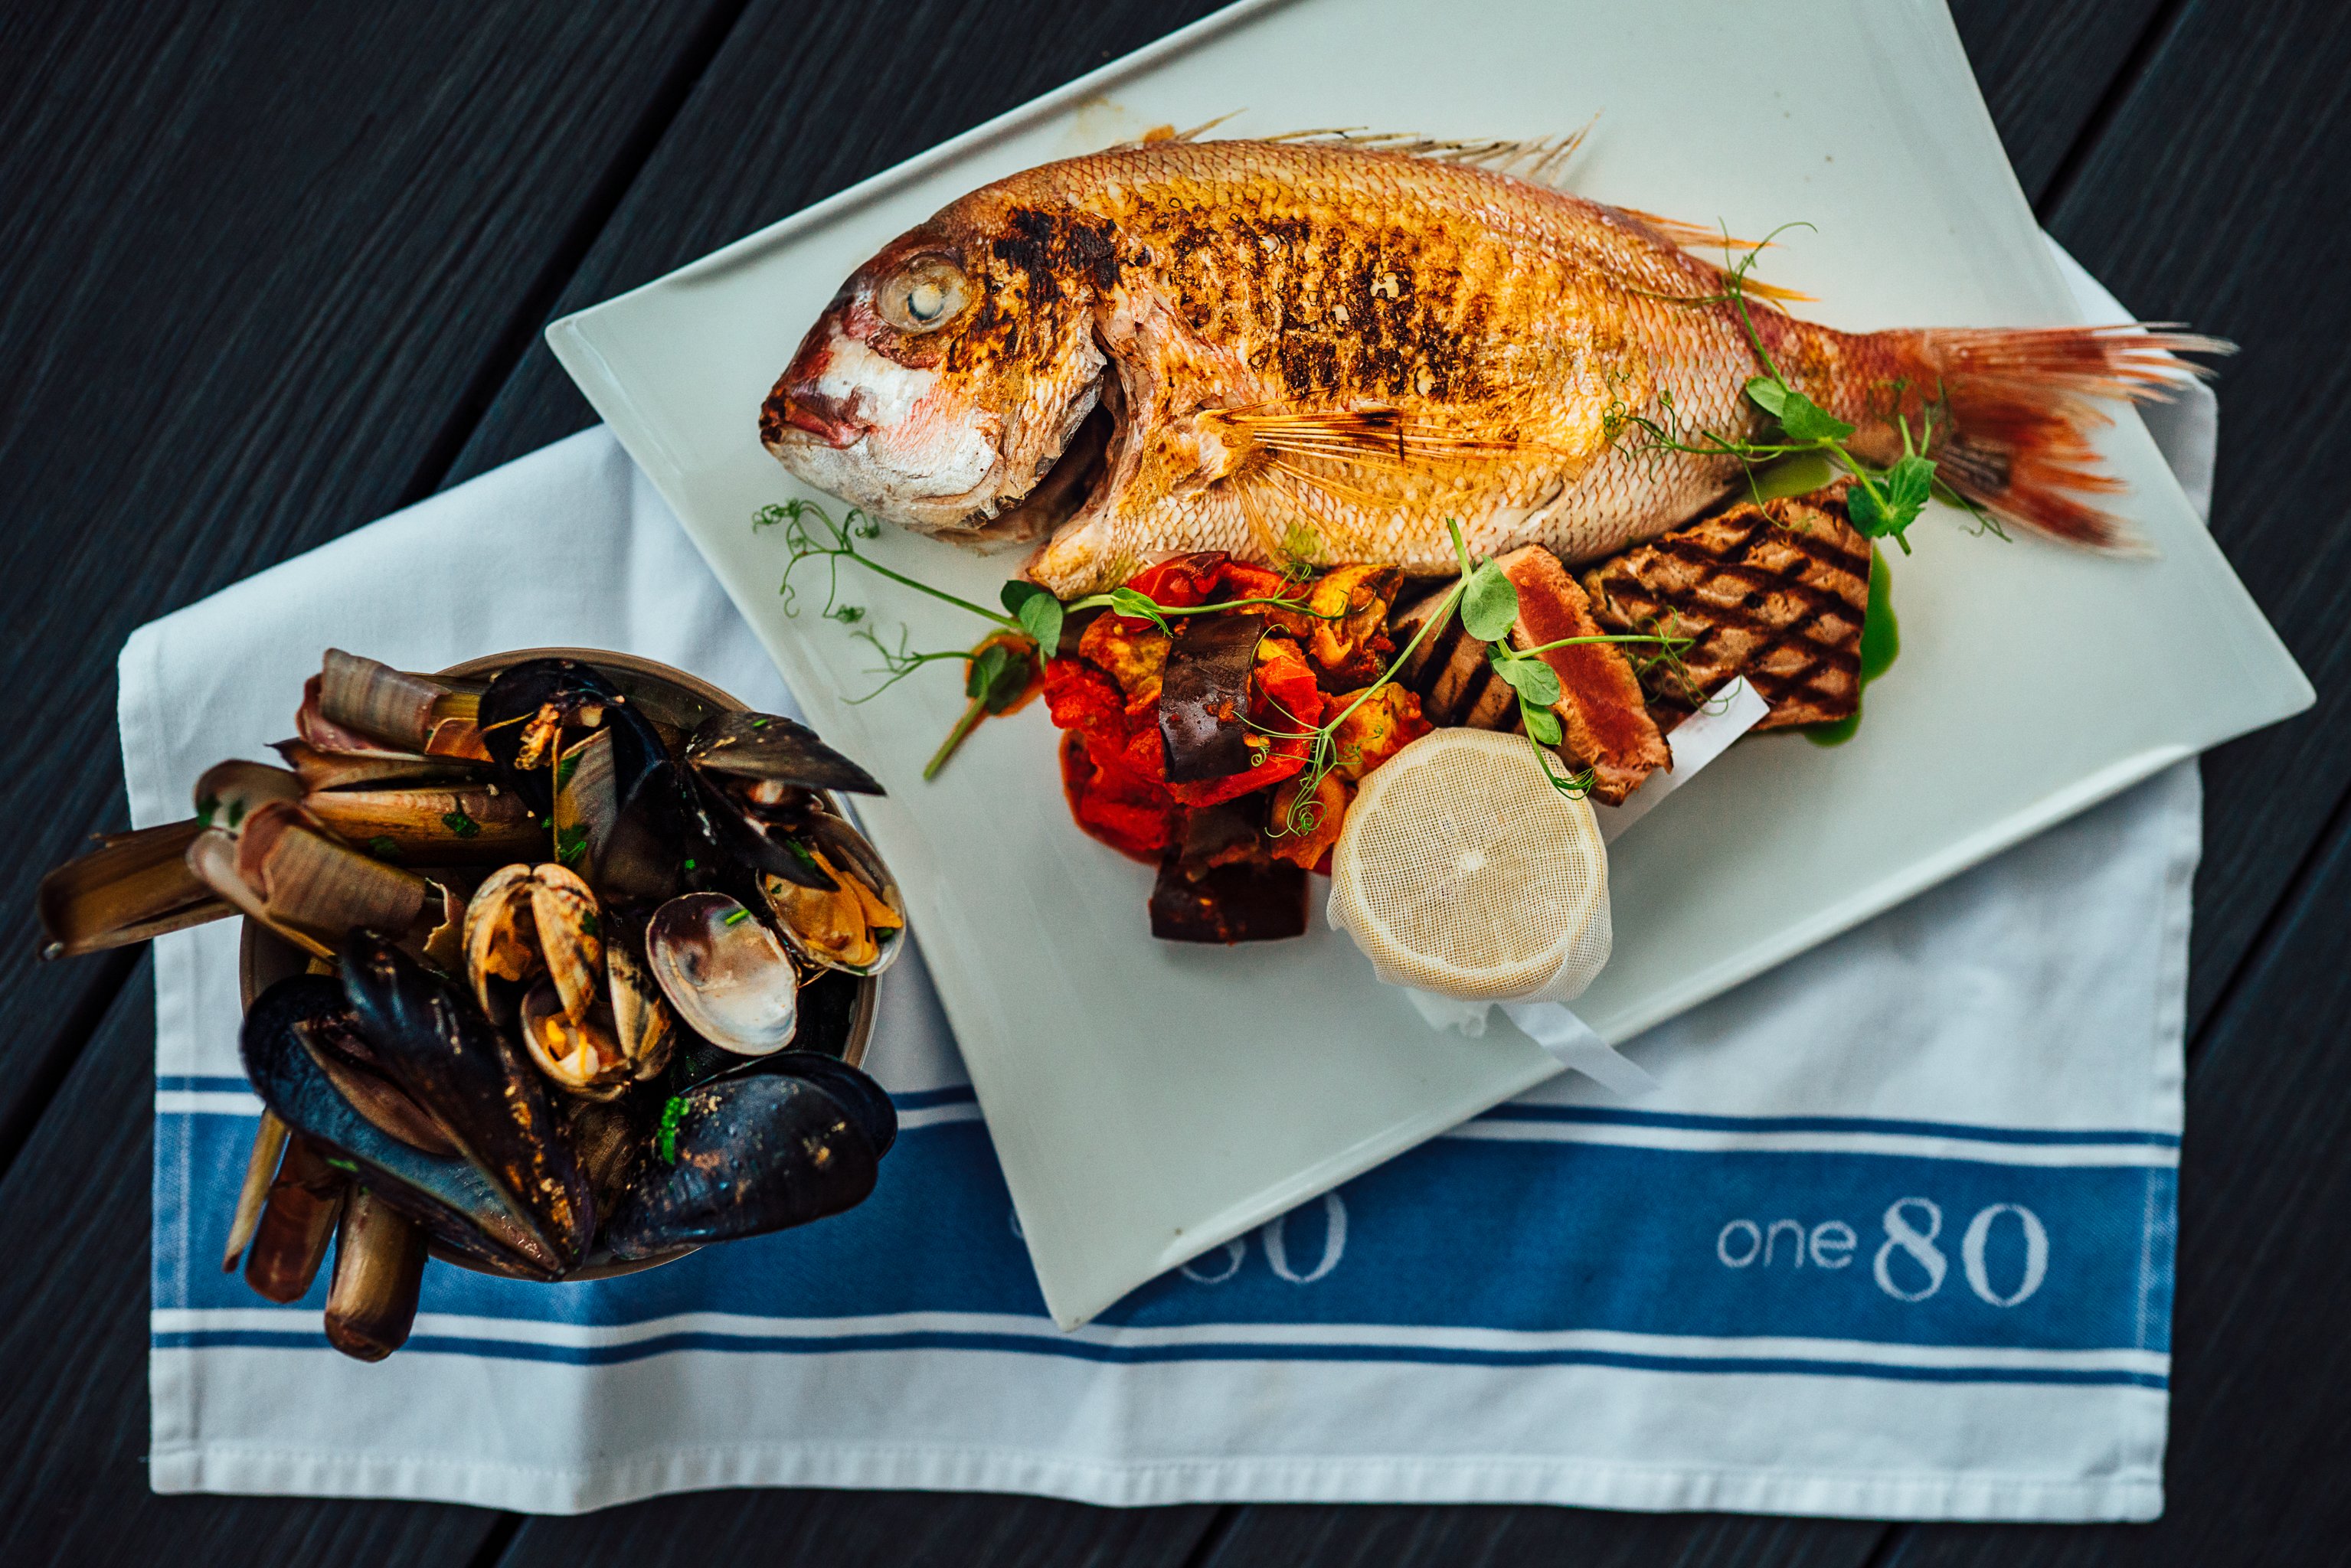 one80 Kitchen at Mgarr Yacht Marina - fish and seafood restaurants in Malta